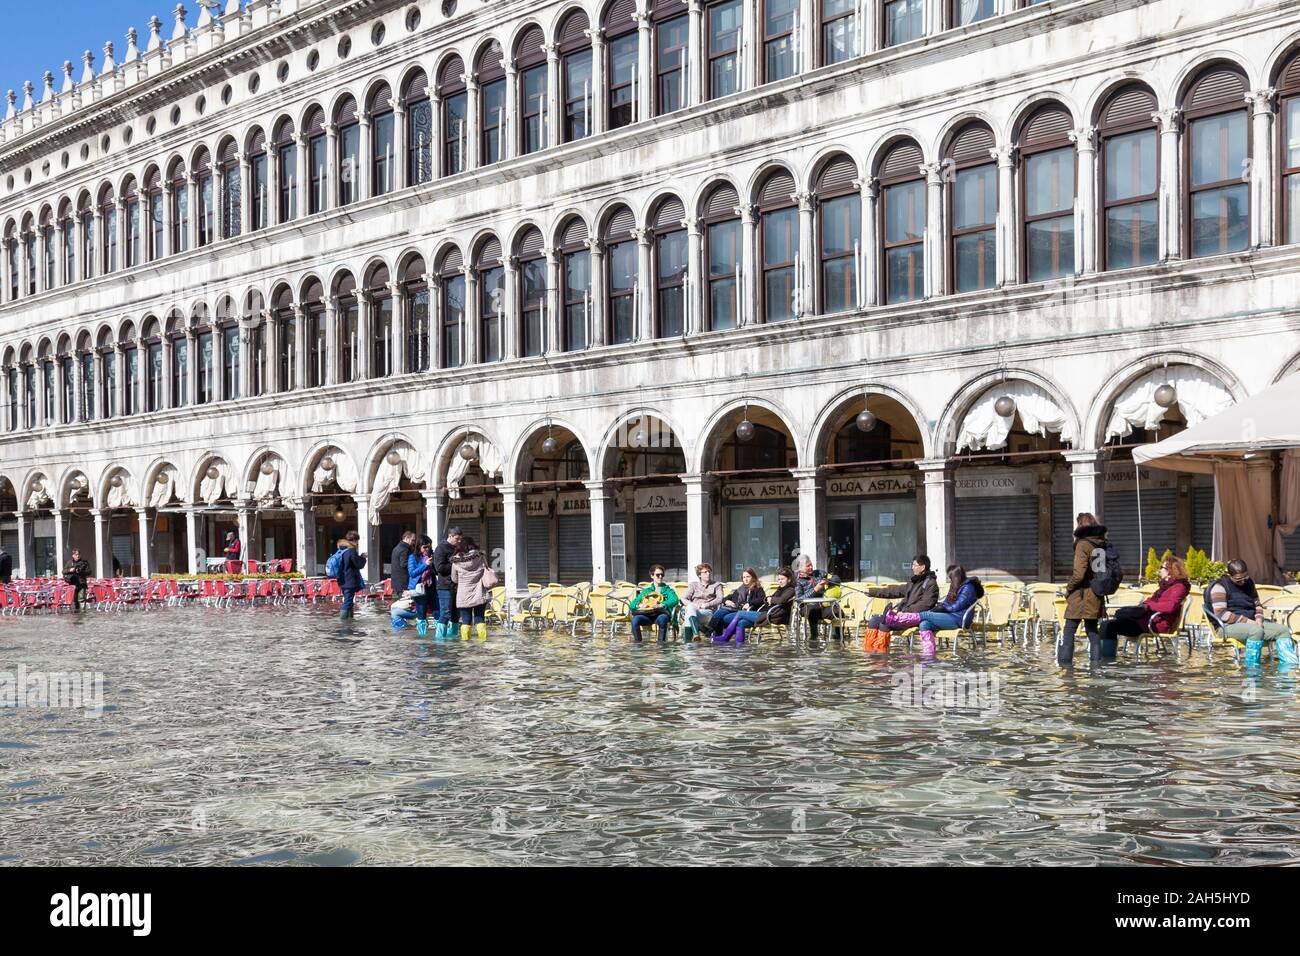 Acqua Alta inondations lors des grandes marées extrêmes de la Piazza San Marco, Venise, Italie Banque D'Images